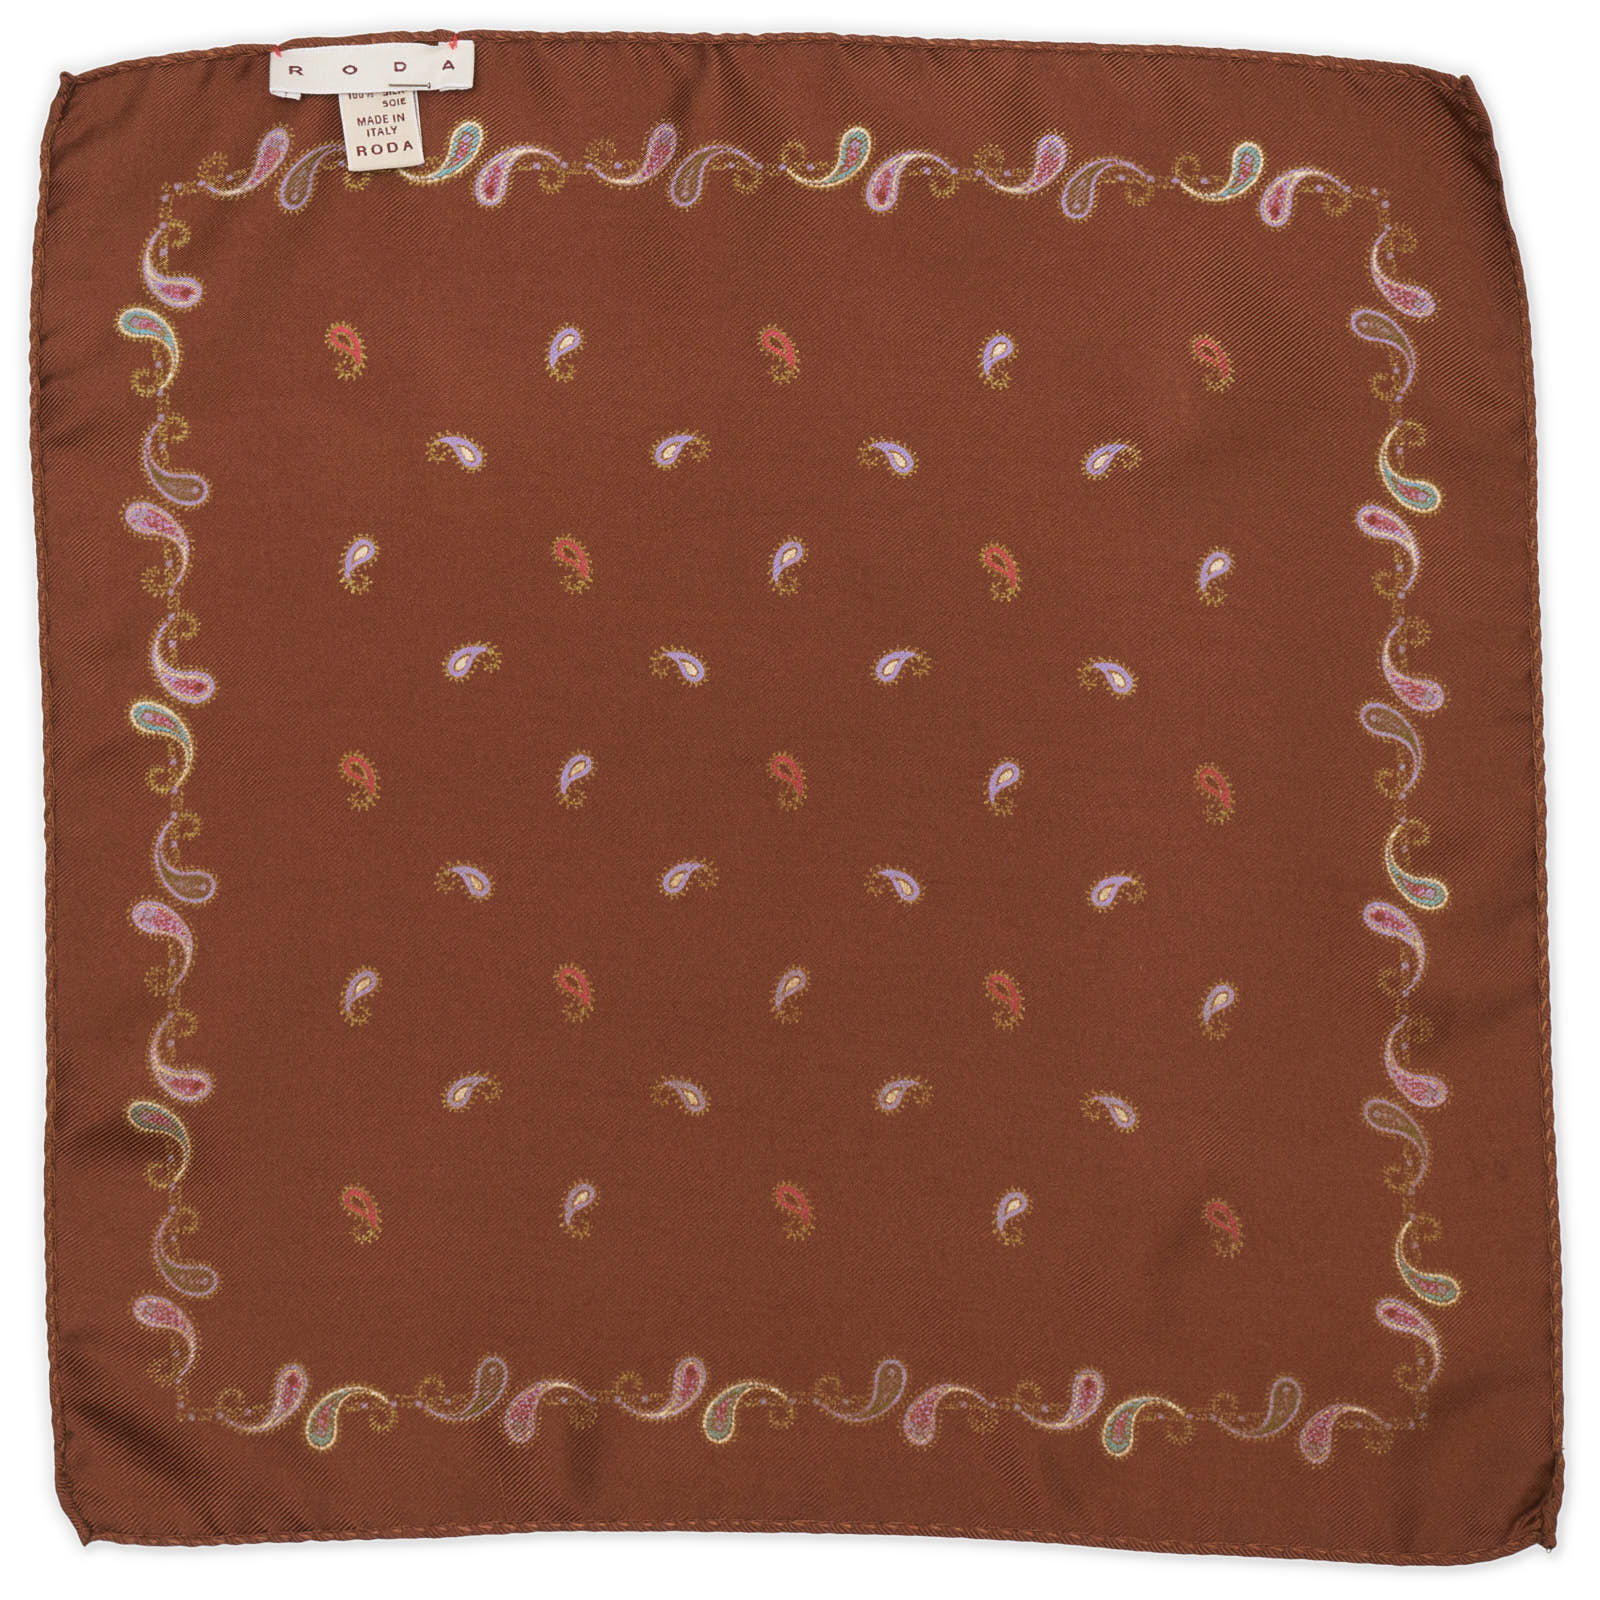 RODA Handmade Brown Boteh Silk Pocket Square NEW 31cm x 31cm